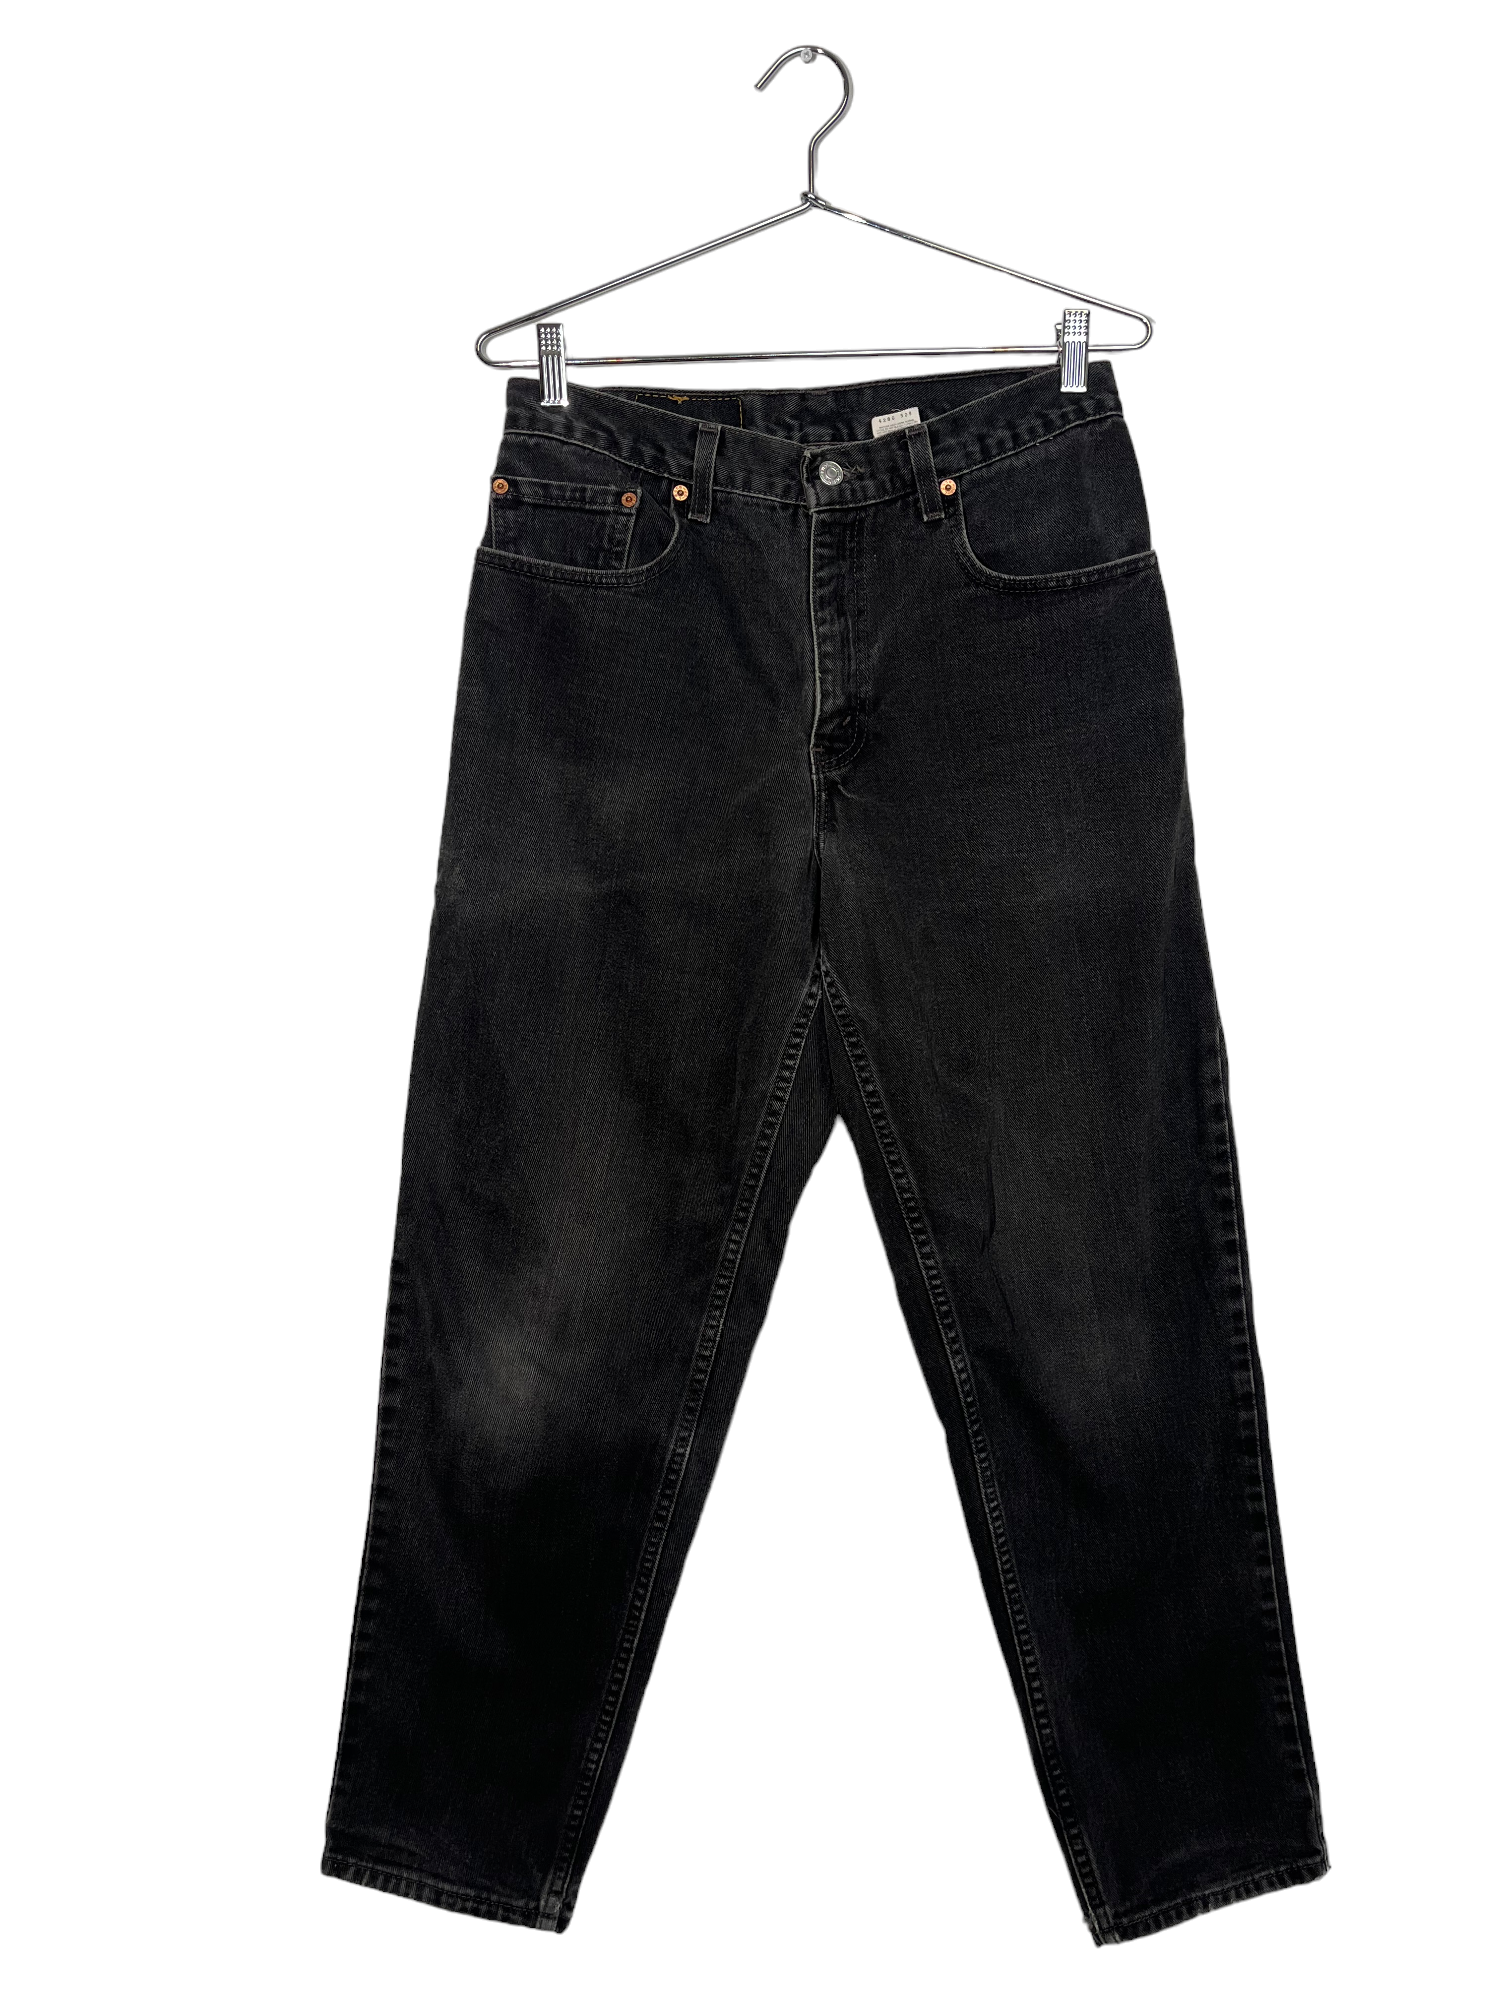 Black Denim Levi Jeans